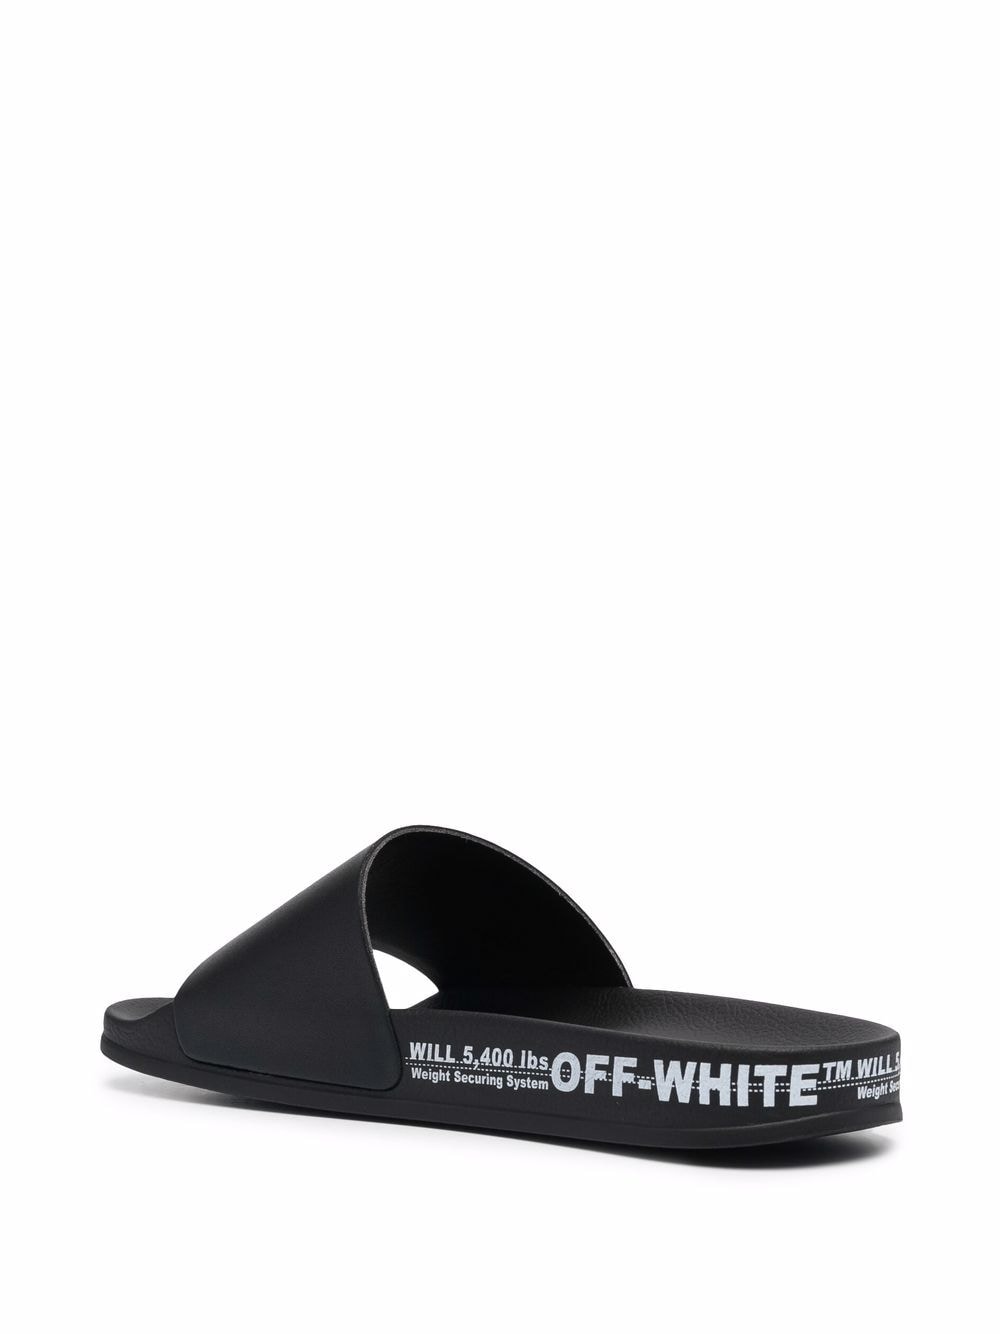 Off-White Industrial Belt Sliders - Black - Escape Menswear